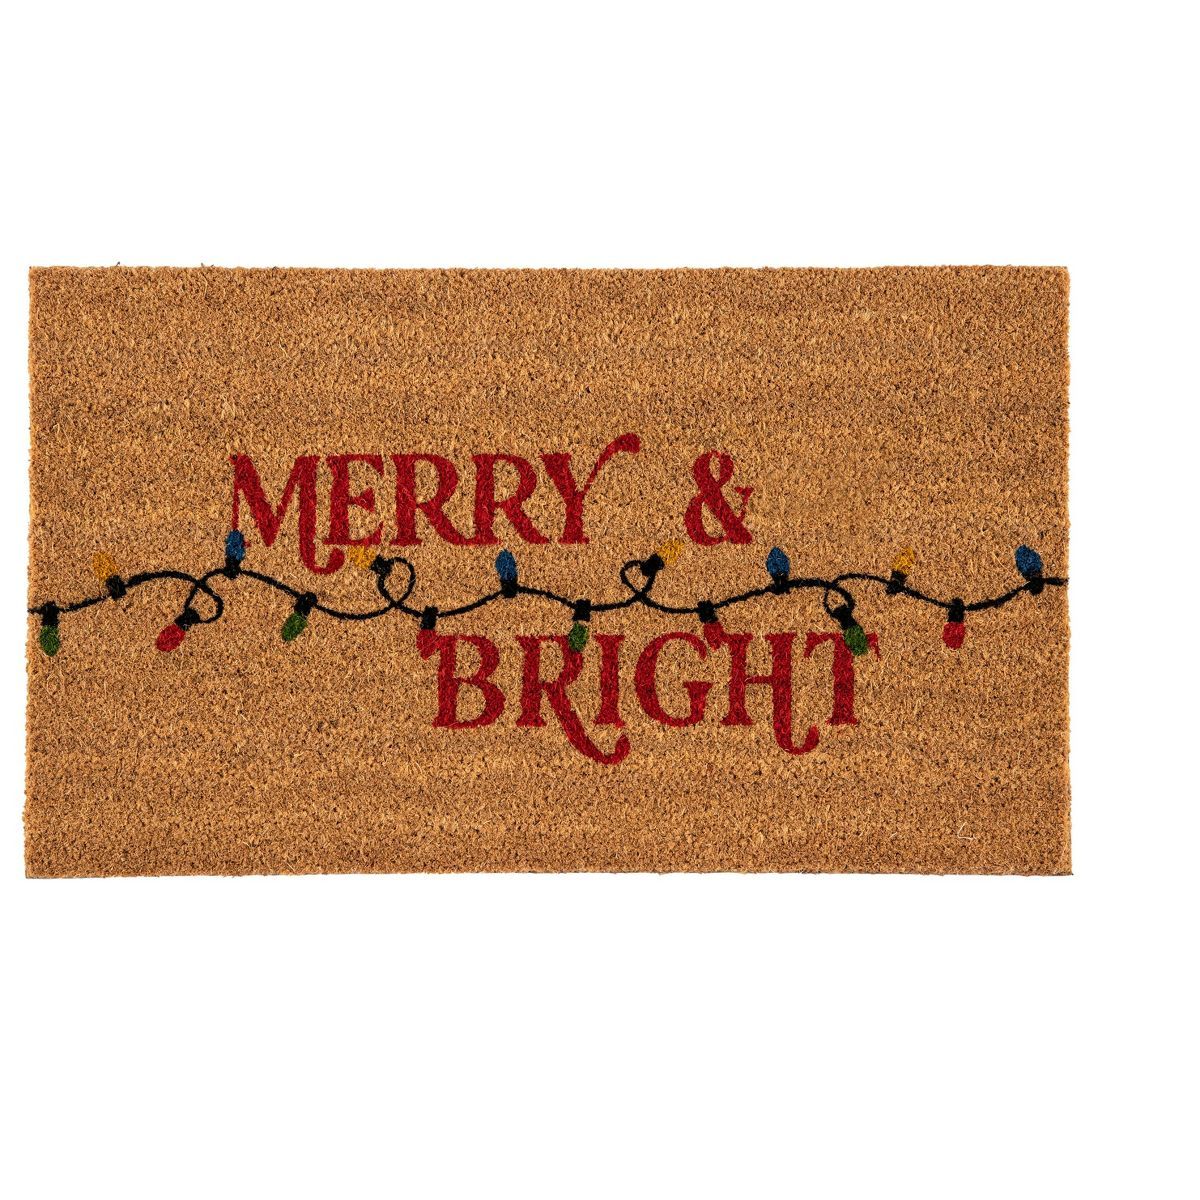 Shiraleah "Merry & Bright" Holiday Doormat | Target